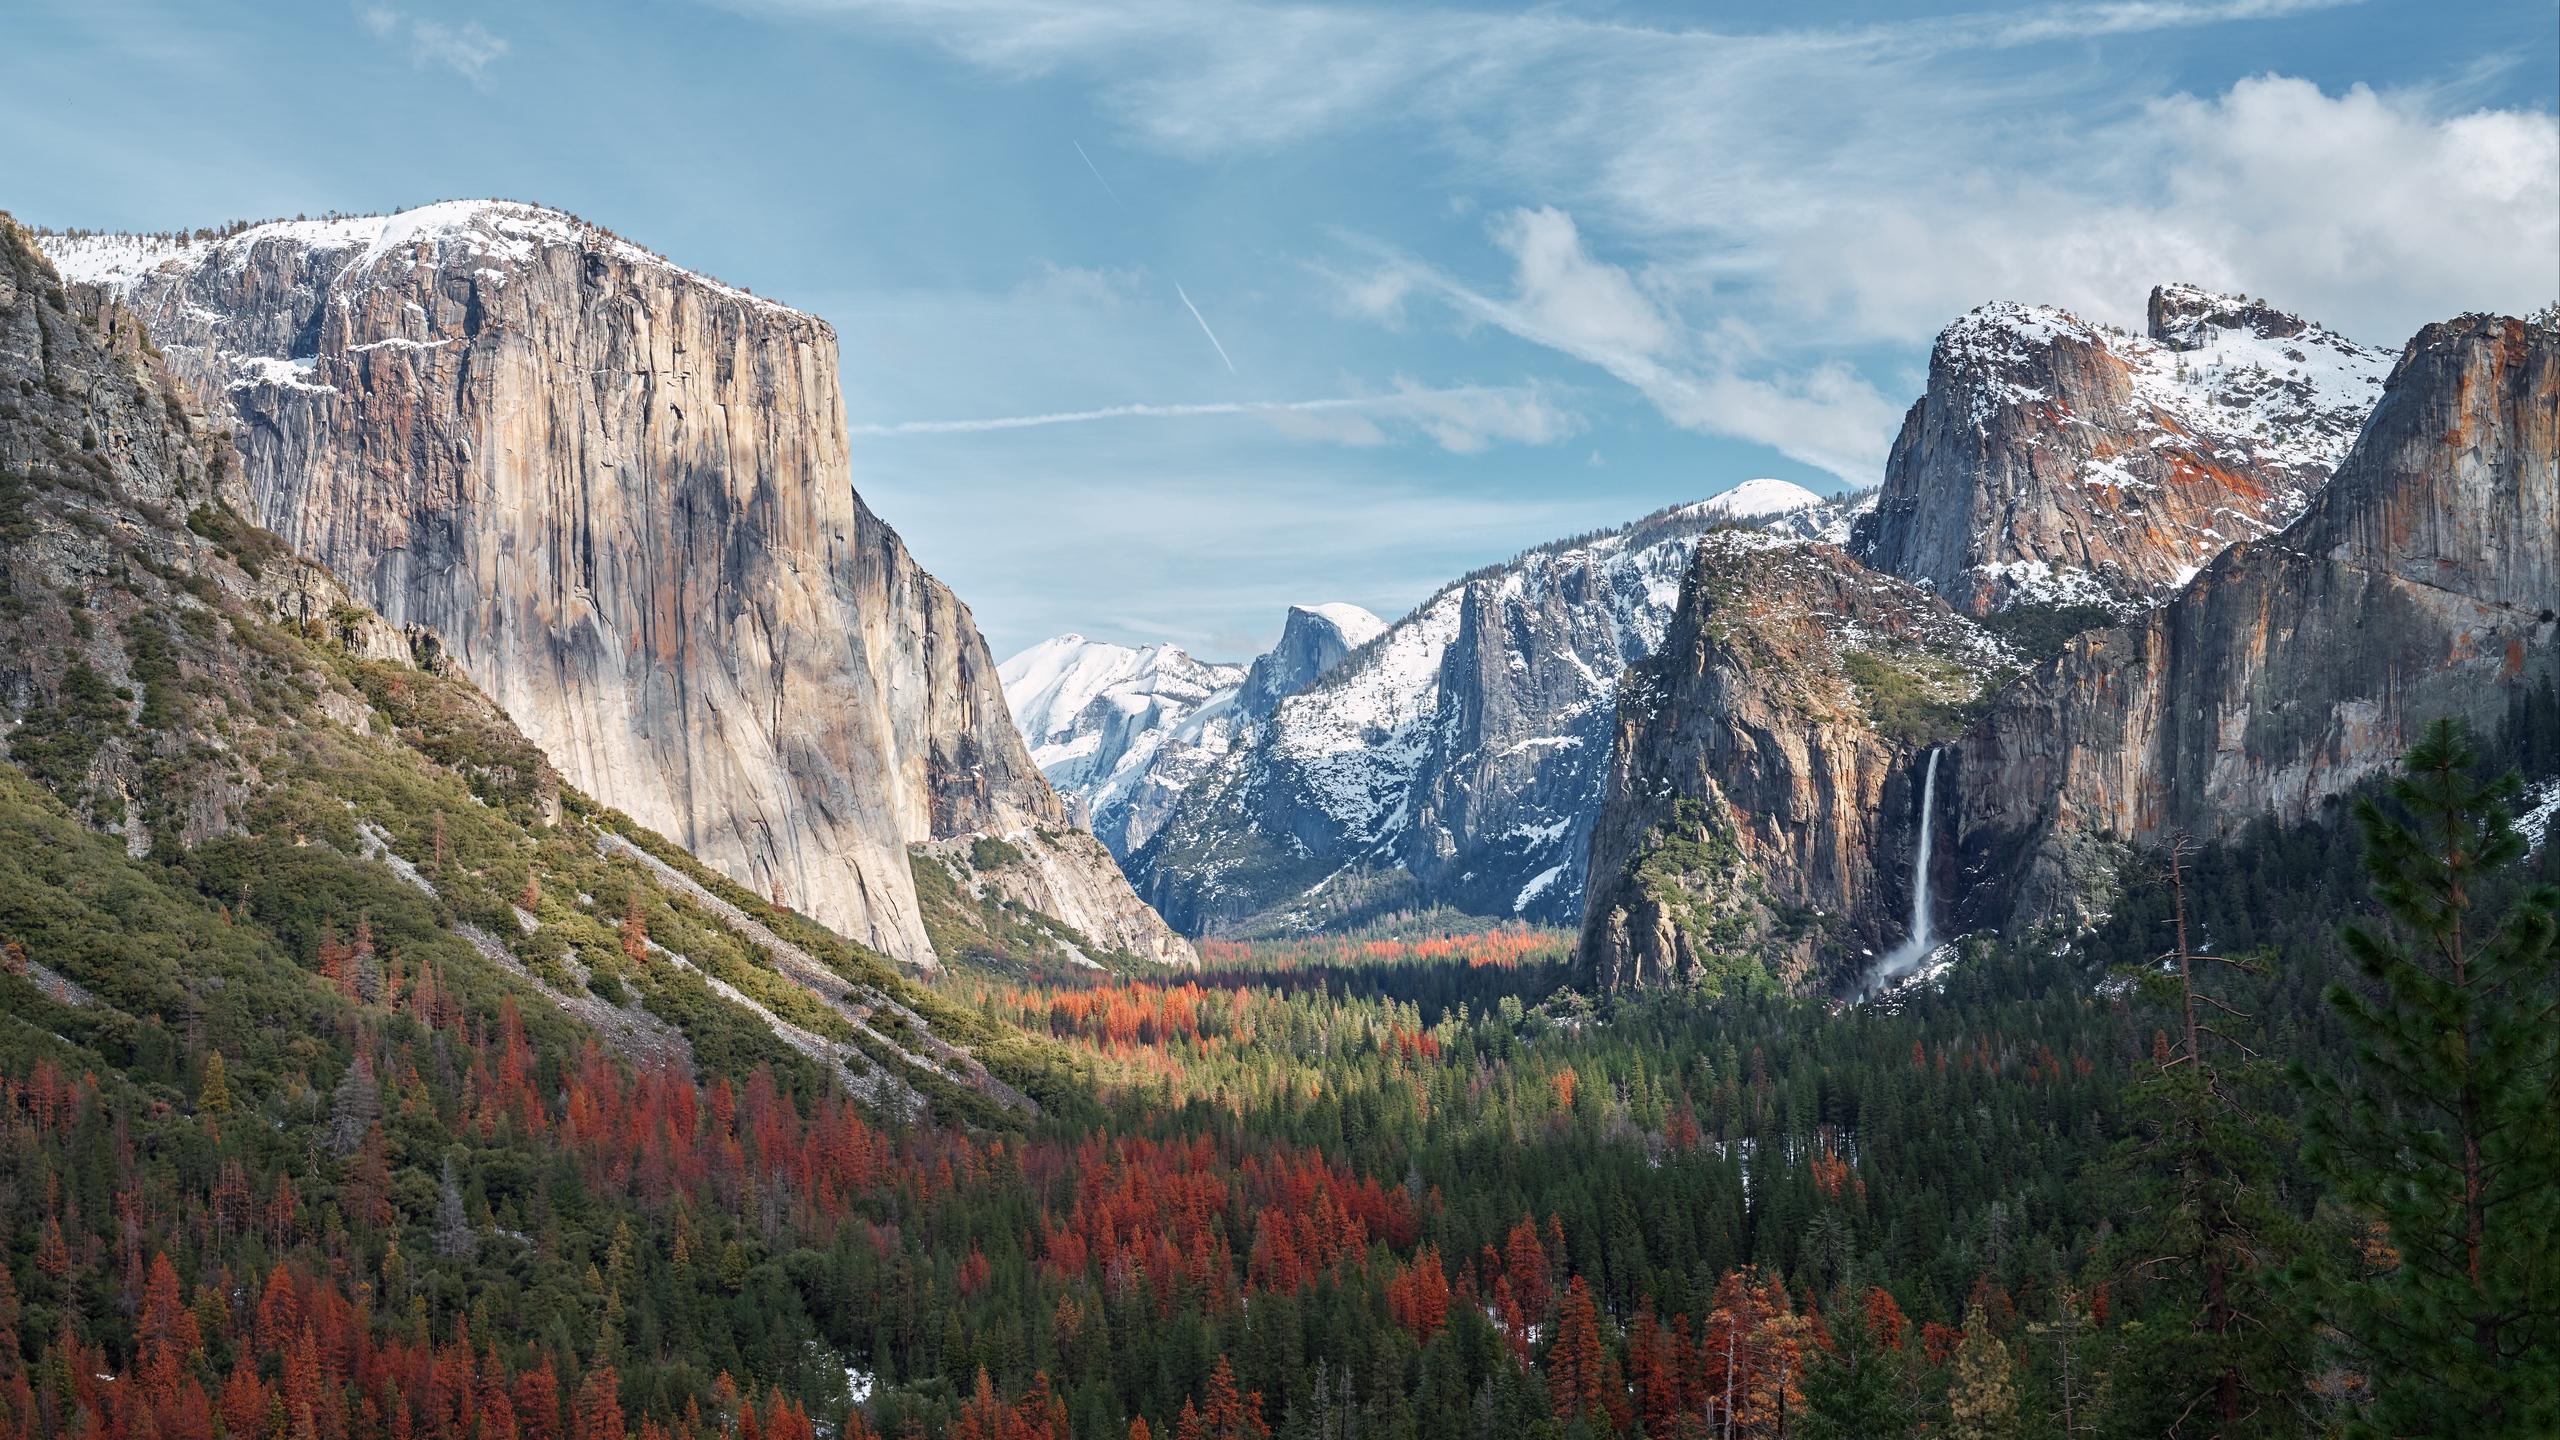 Download wallpaper 2560x1440 mountains, trees, mountain landscape